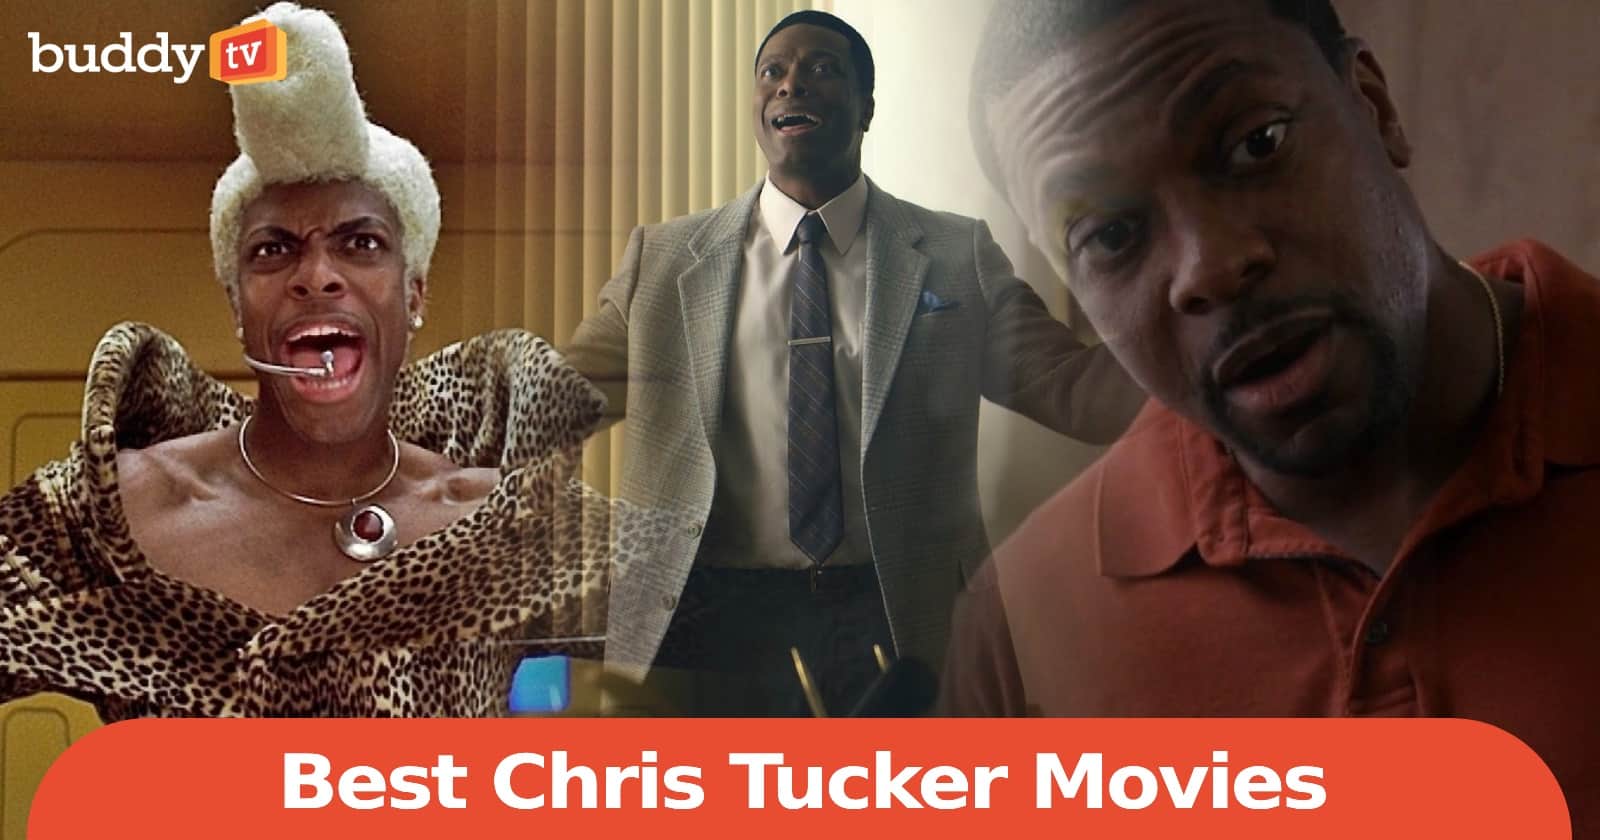 10 Best Chris Tucker Movies in Order, Ranked by Viewers